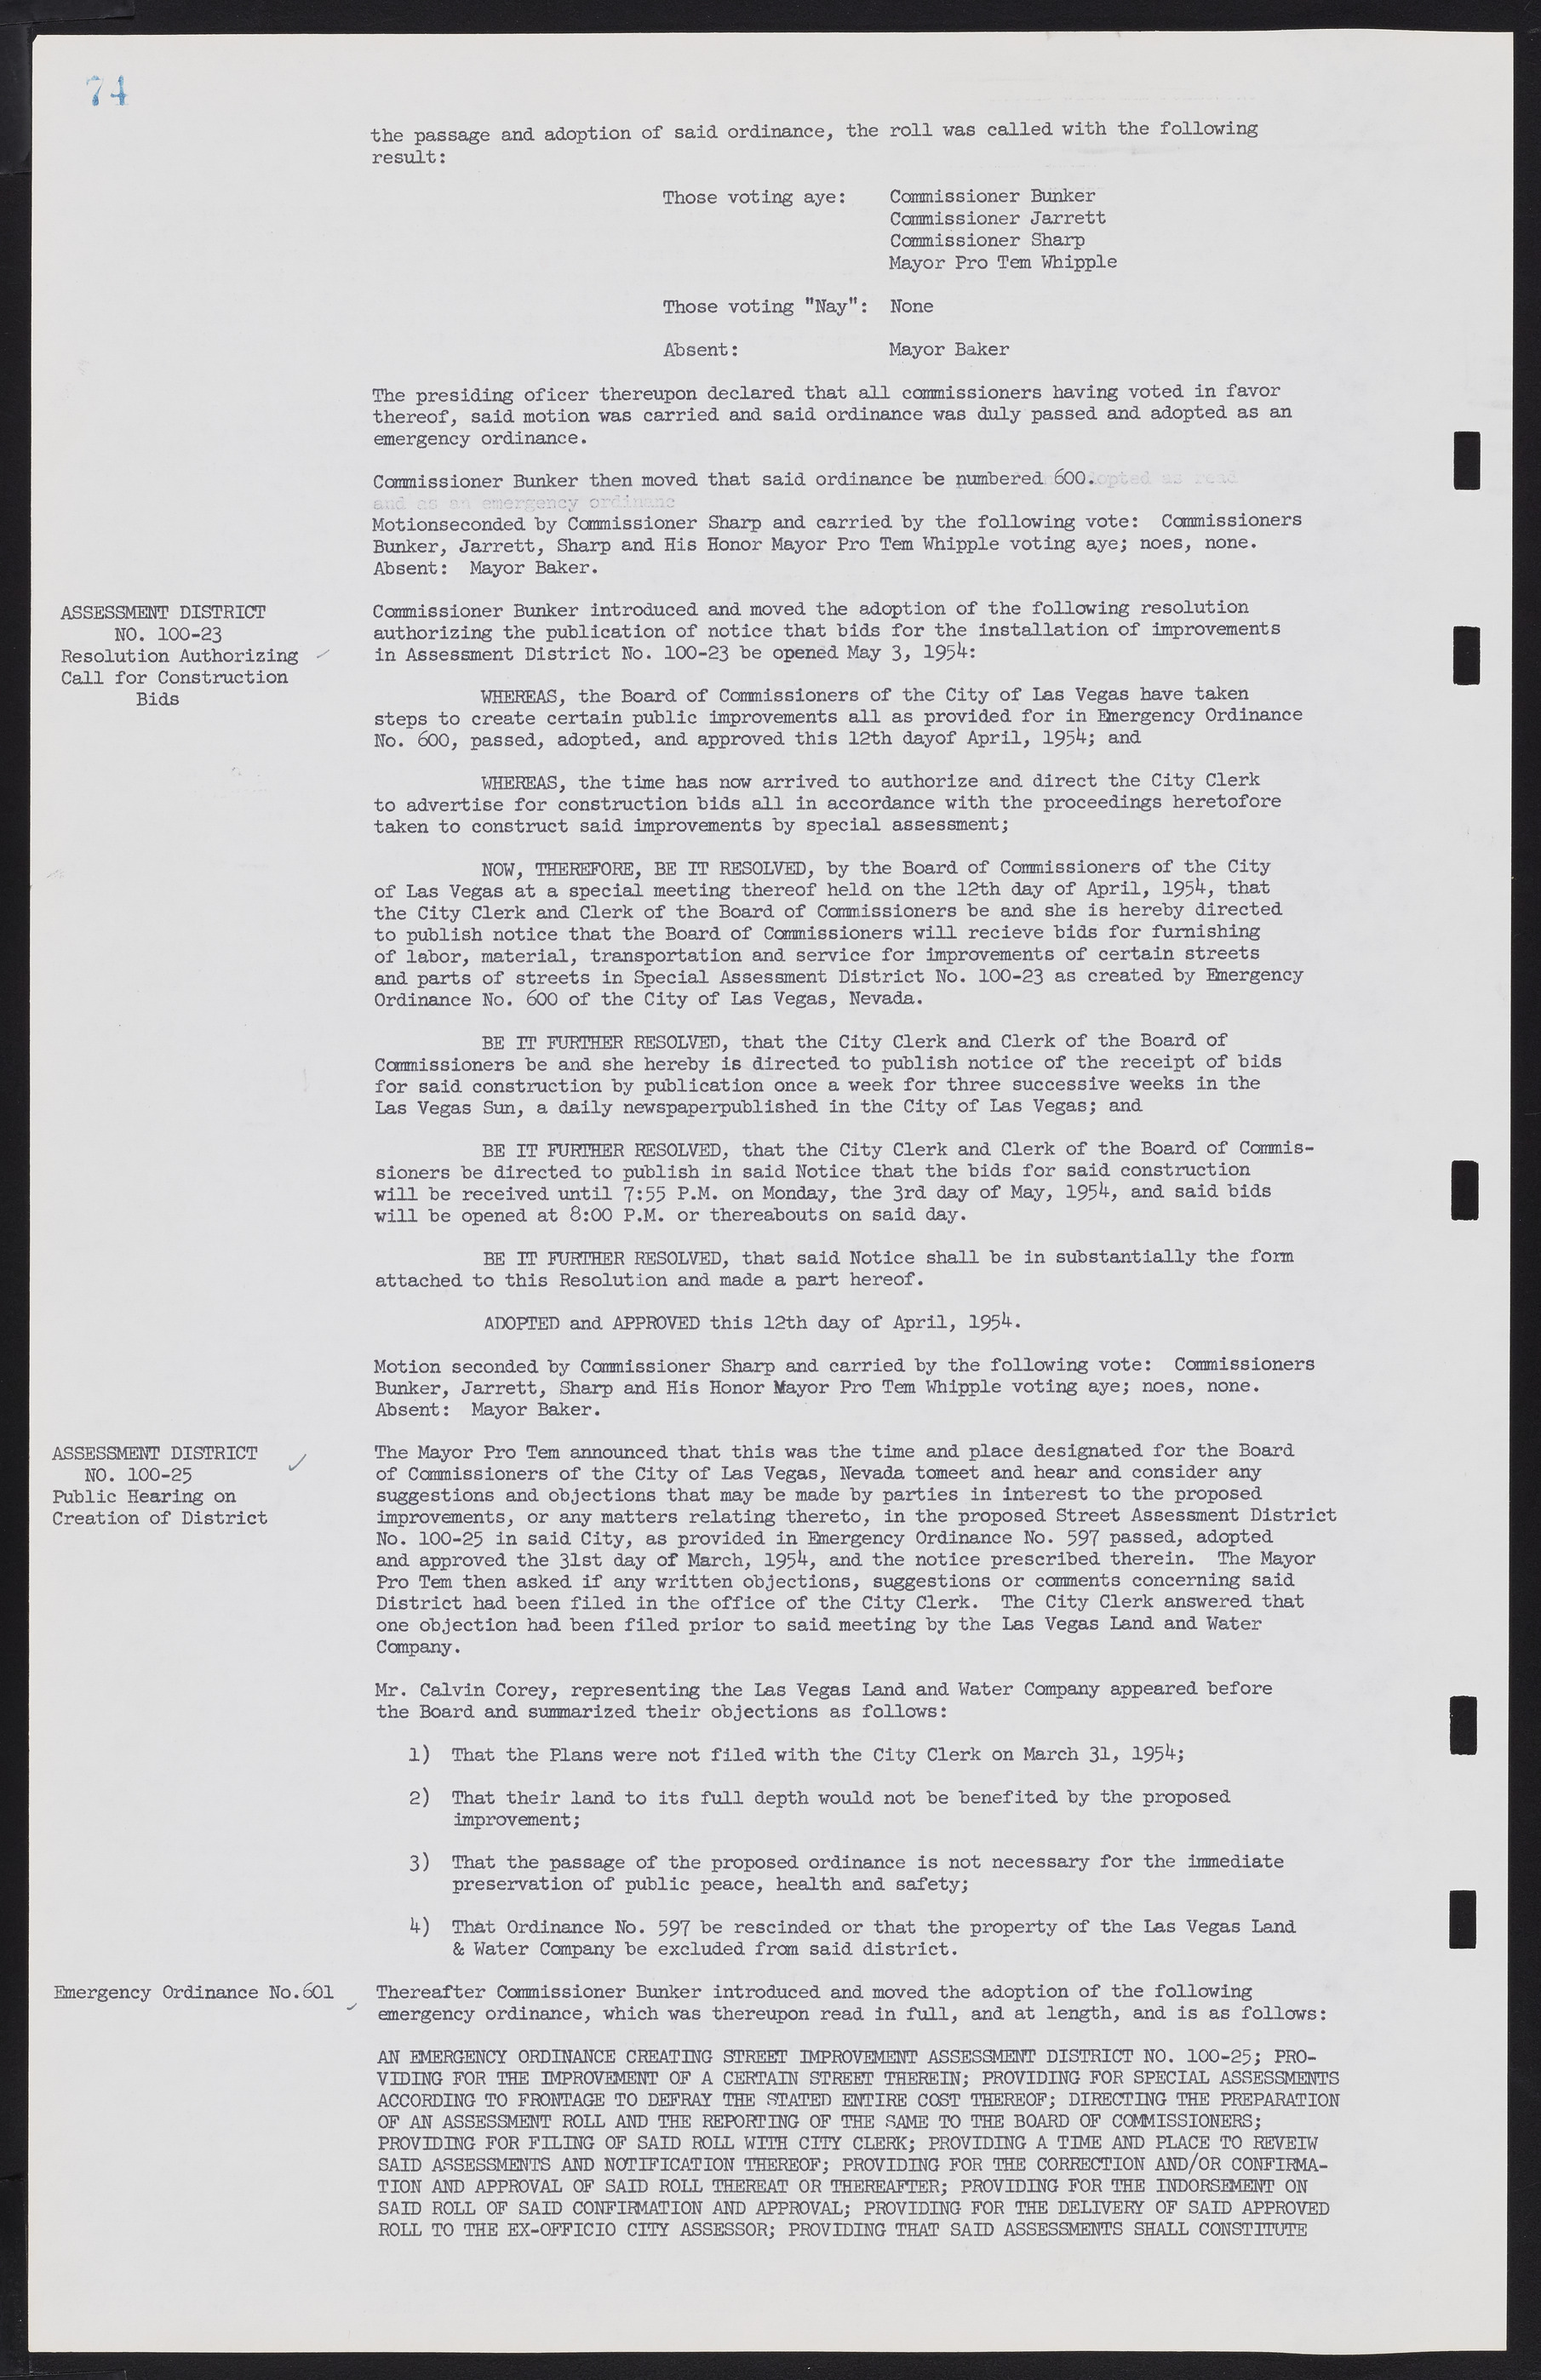 Las Vegas City Commission Minutes, February 17, 1954 to September 21, 1955, lvc000009-78